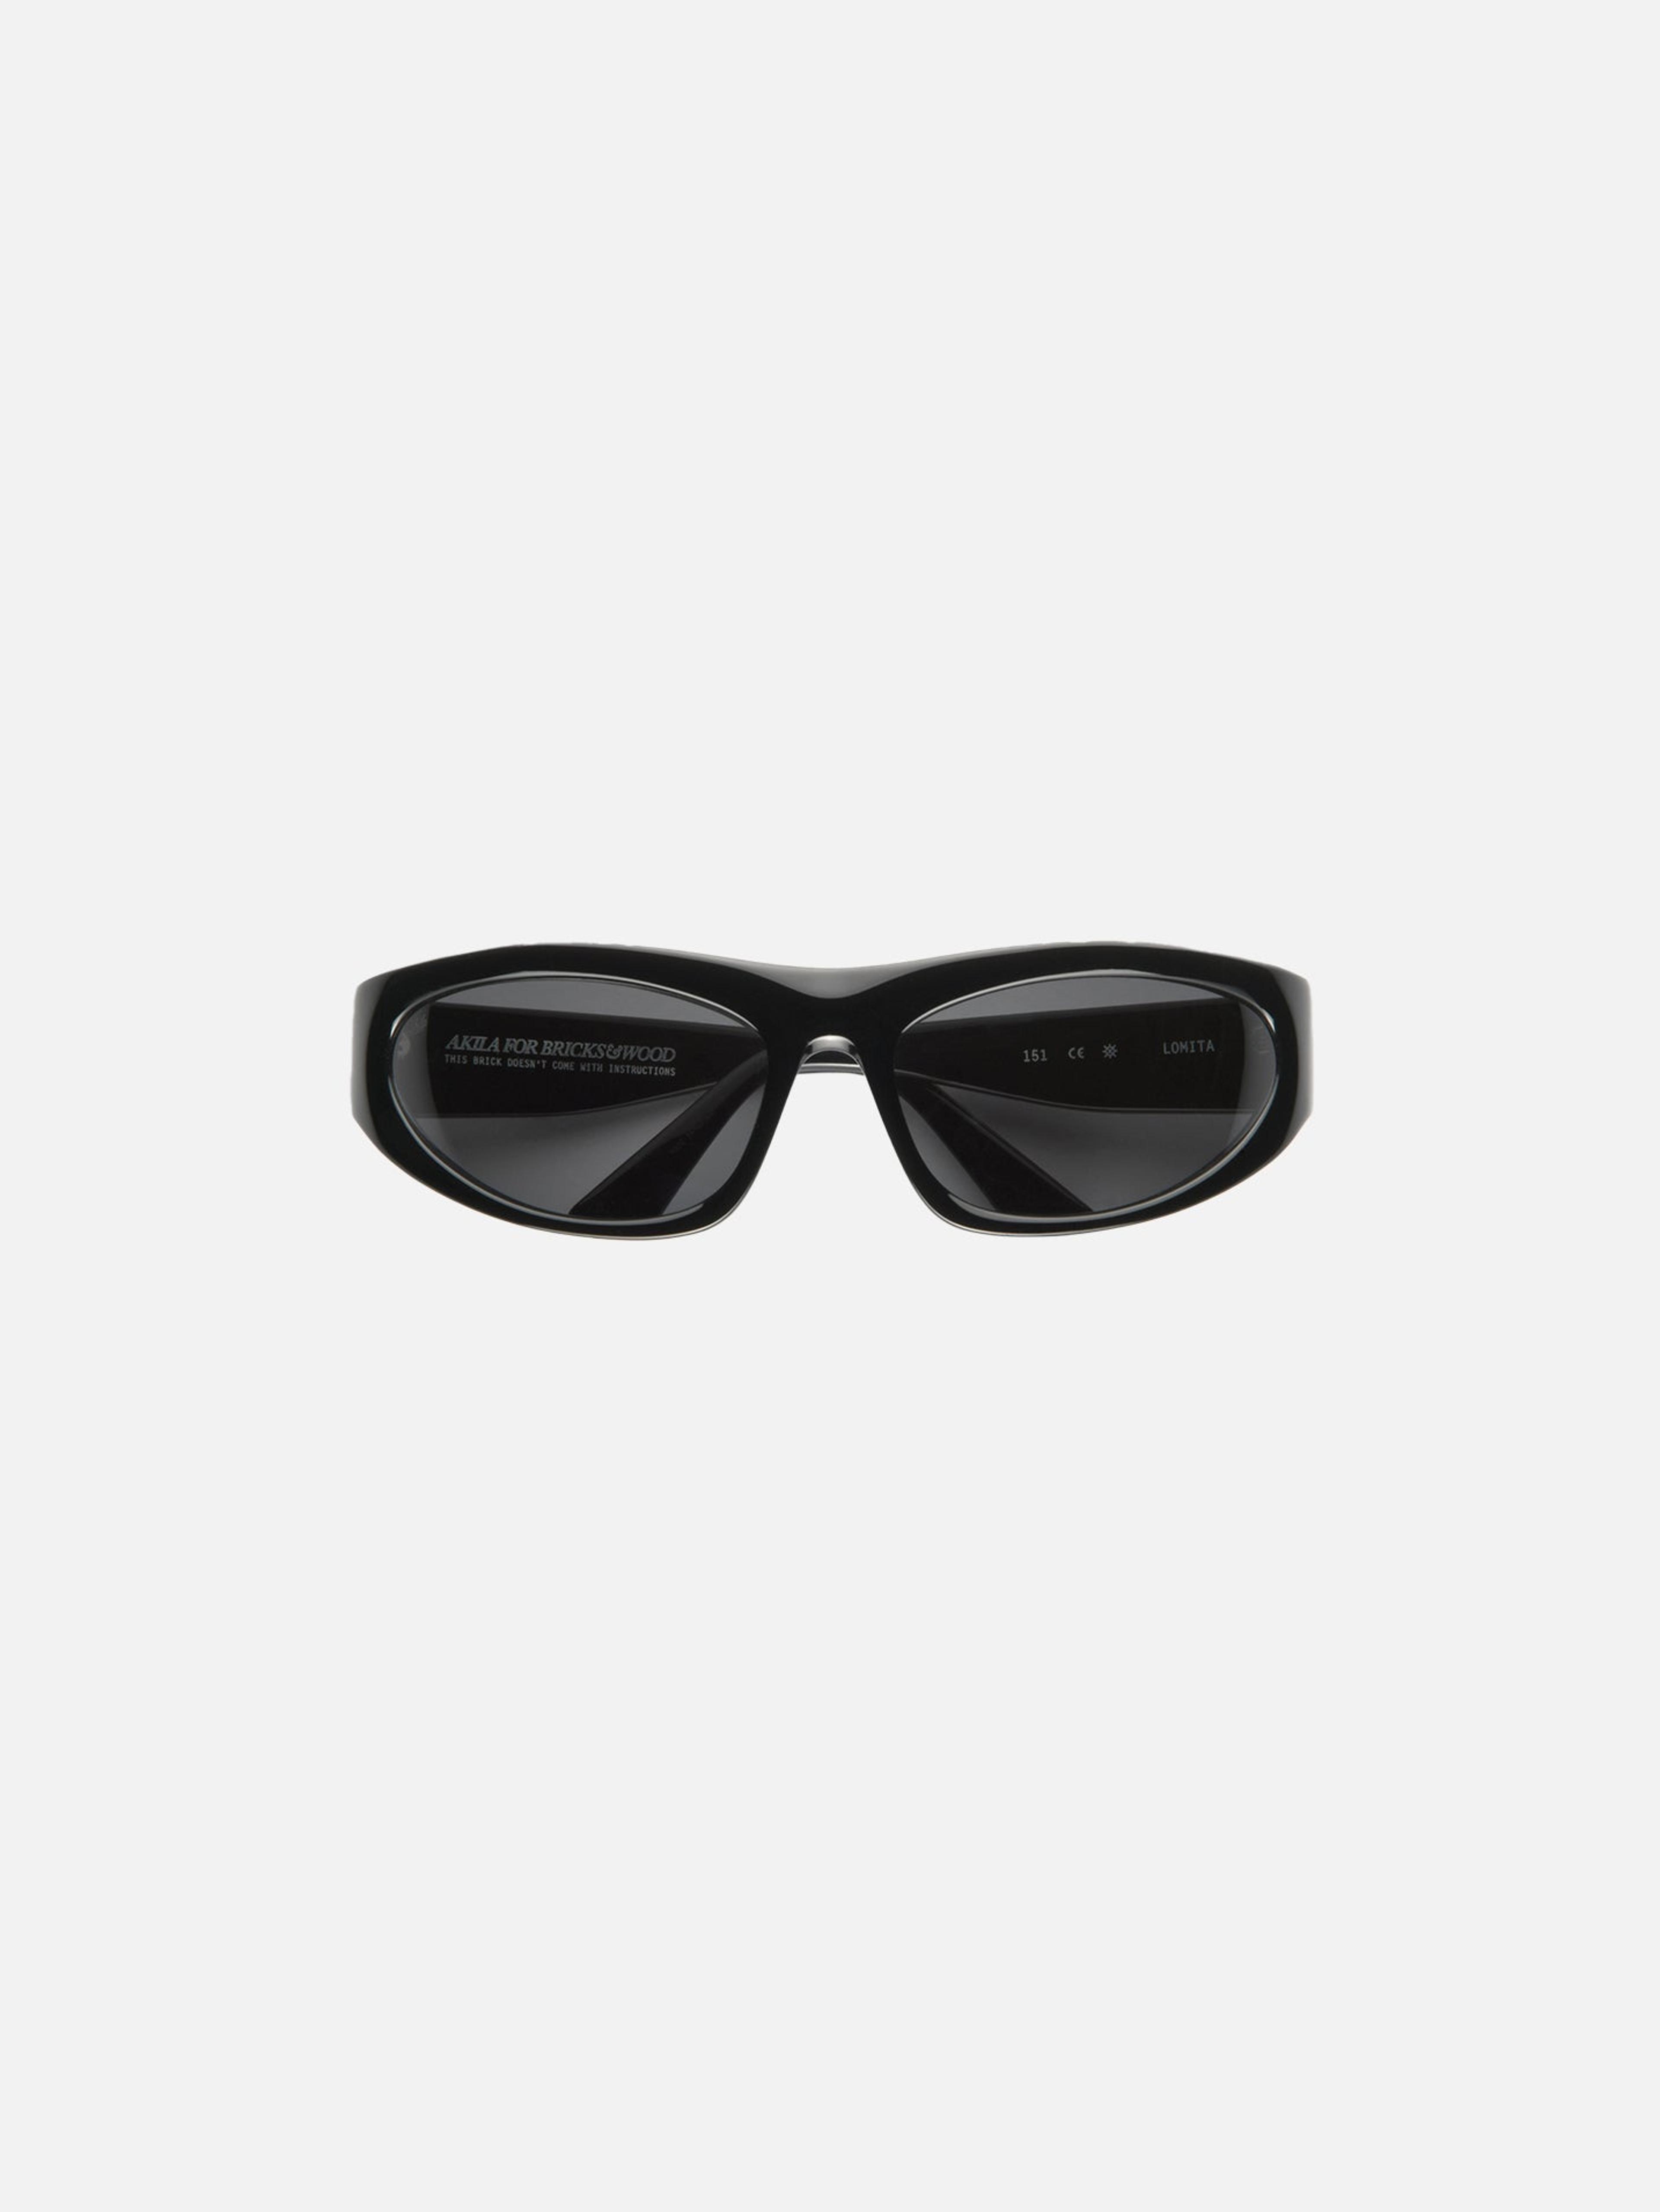 Akila x Bricks & Wood "Lomita" Sunglasses - Black